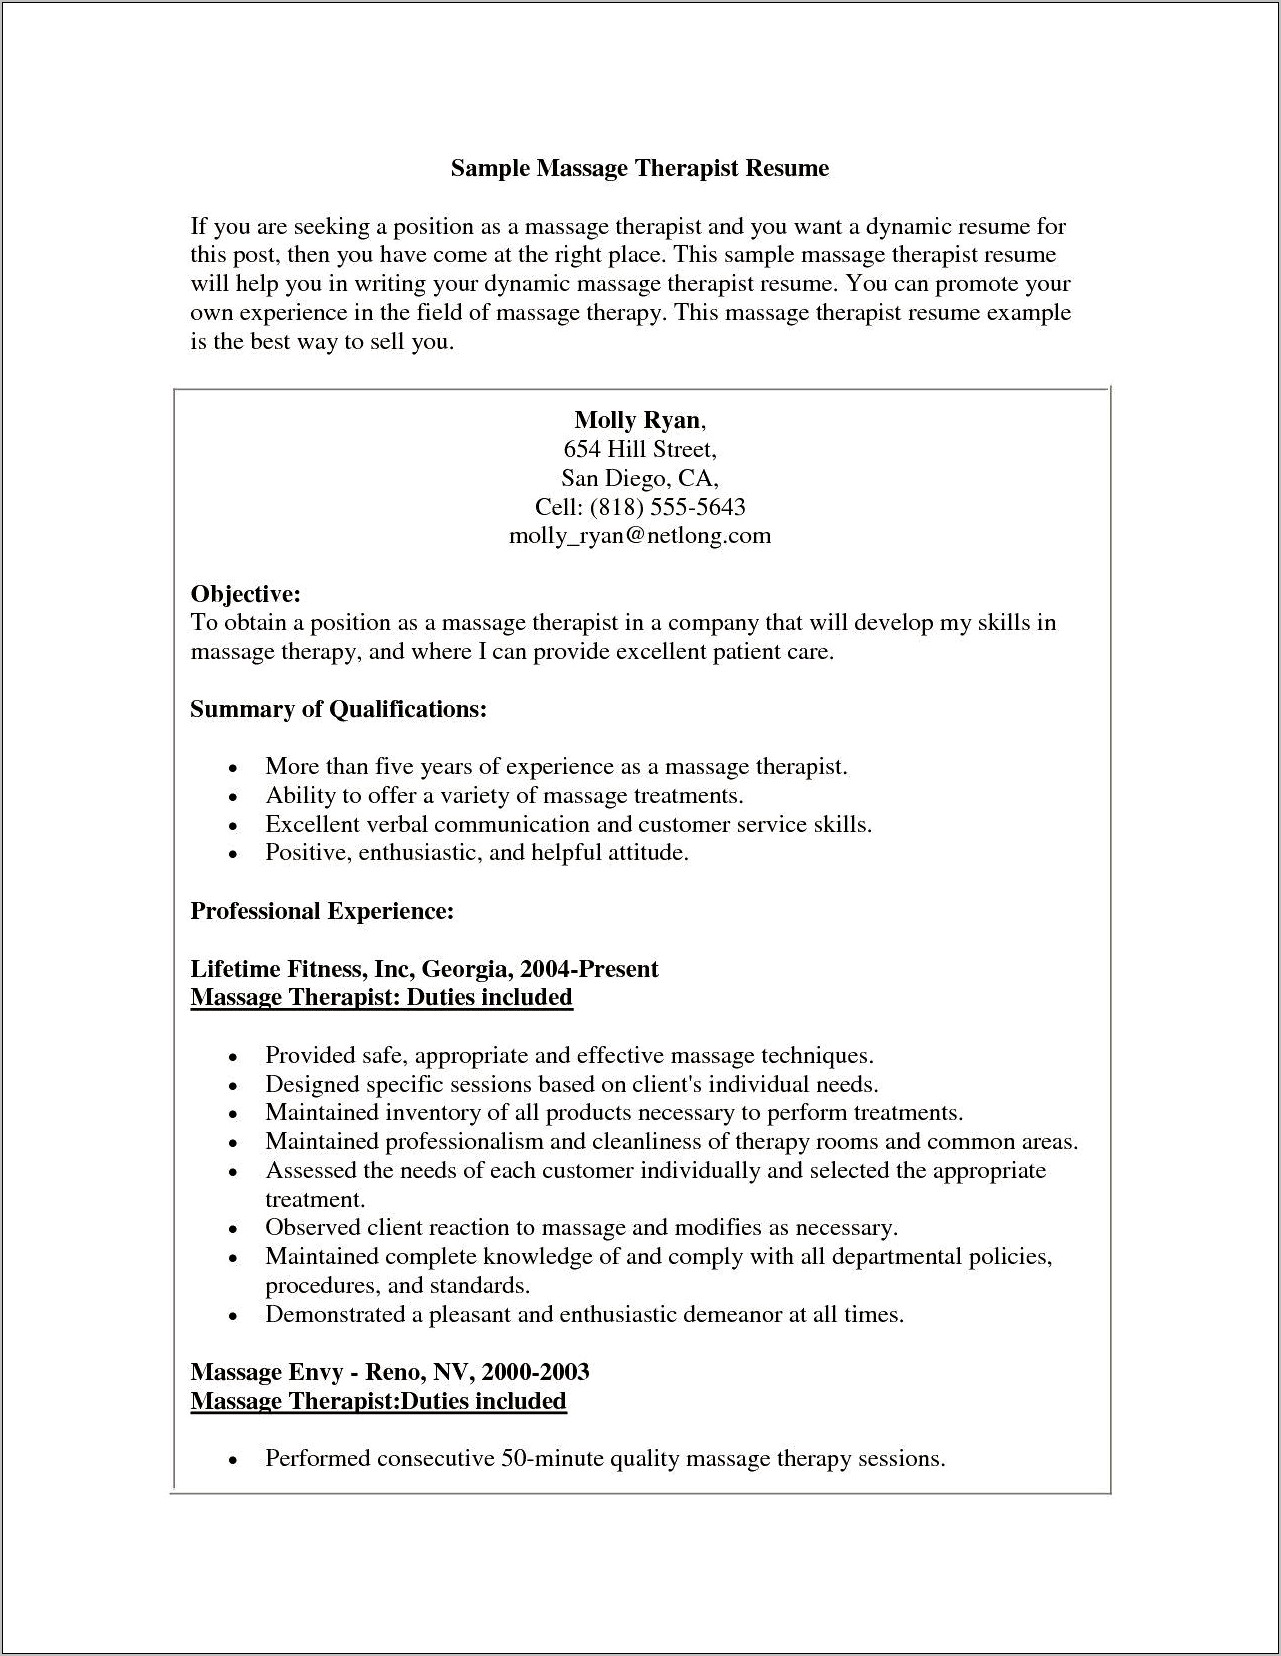 Job Description For Massage Therapist For Resume